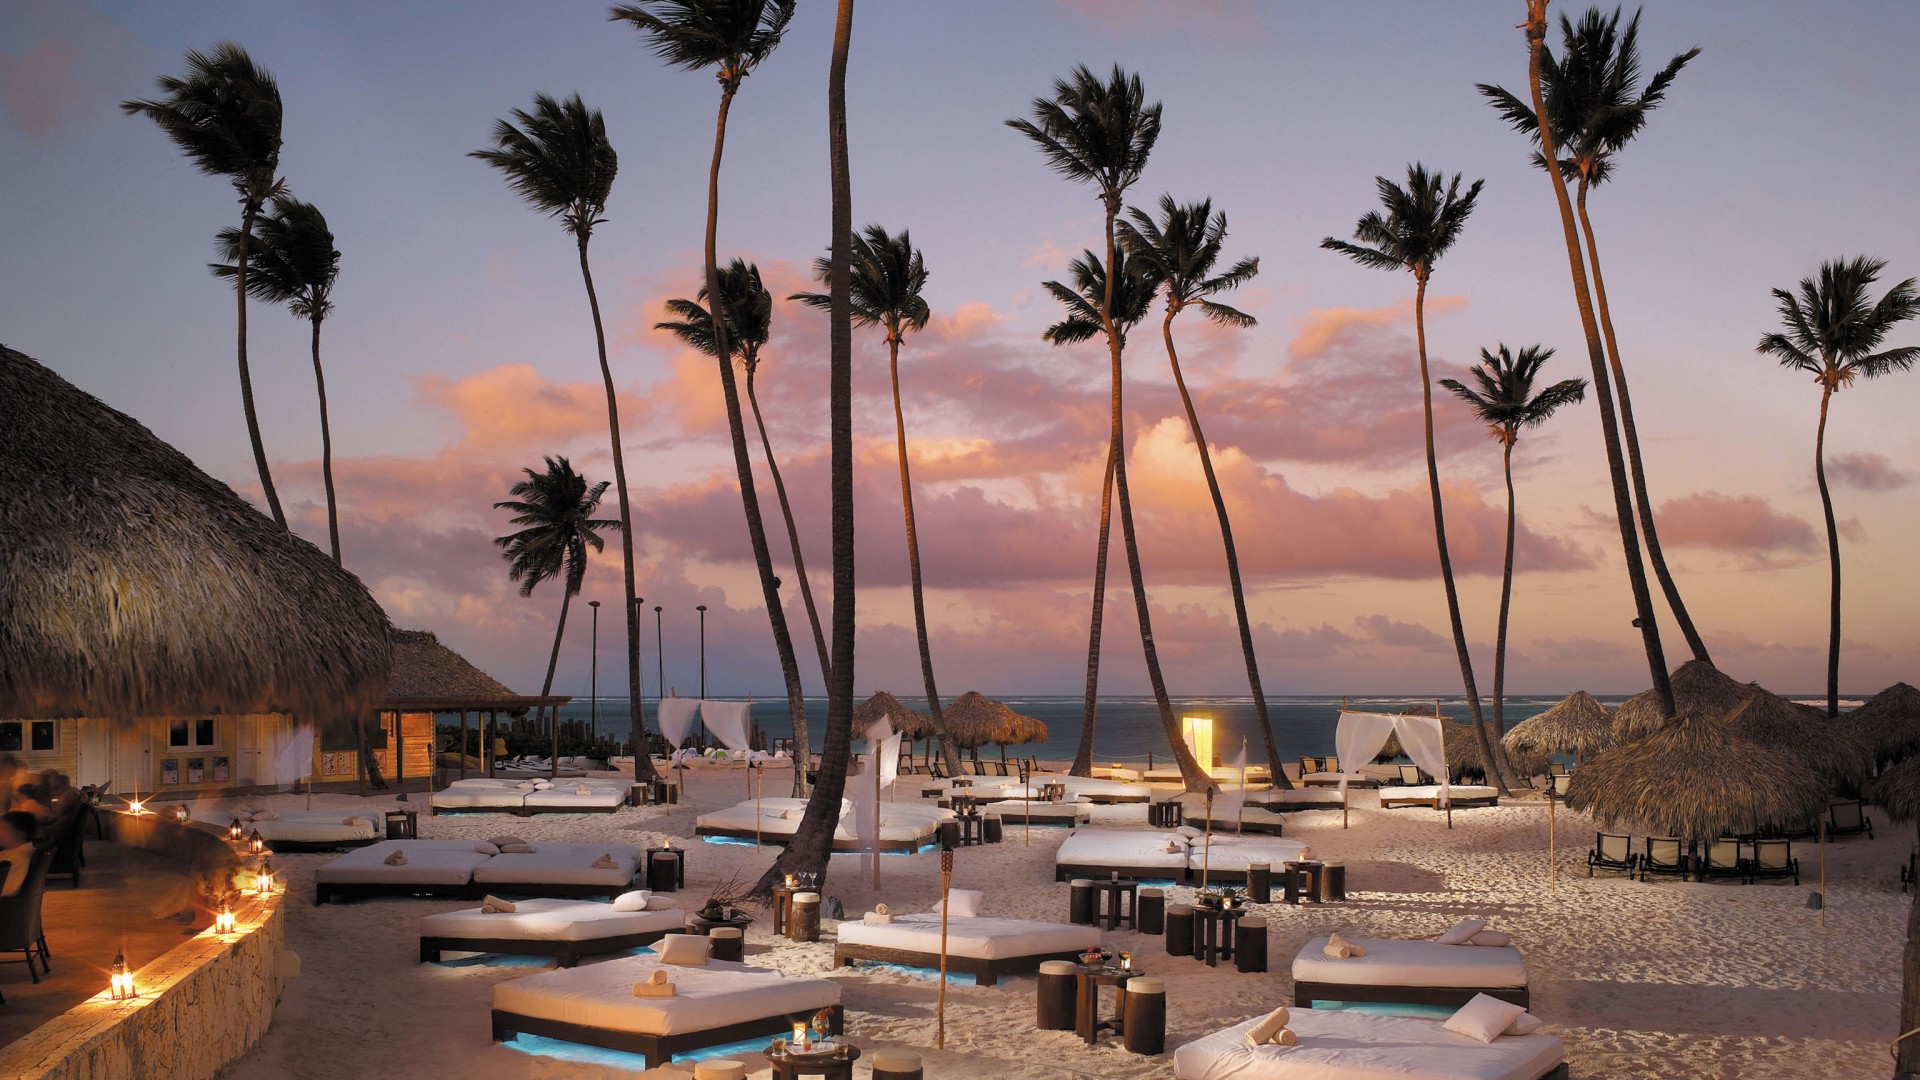 Paradisus Palma Real, Punta Kana, Best Hotels of 2017, Best beaches of 2017, tourism, travel, resort, vacation, sand, sunset (horizontal)